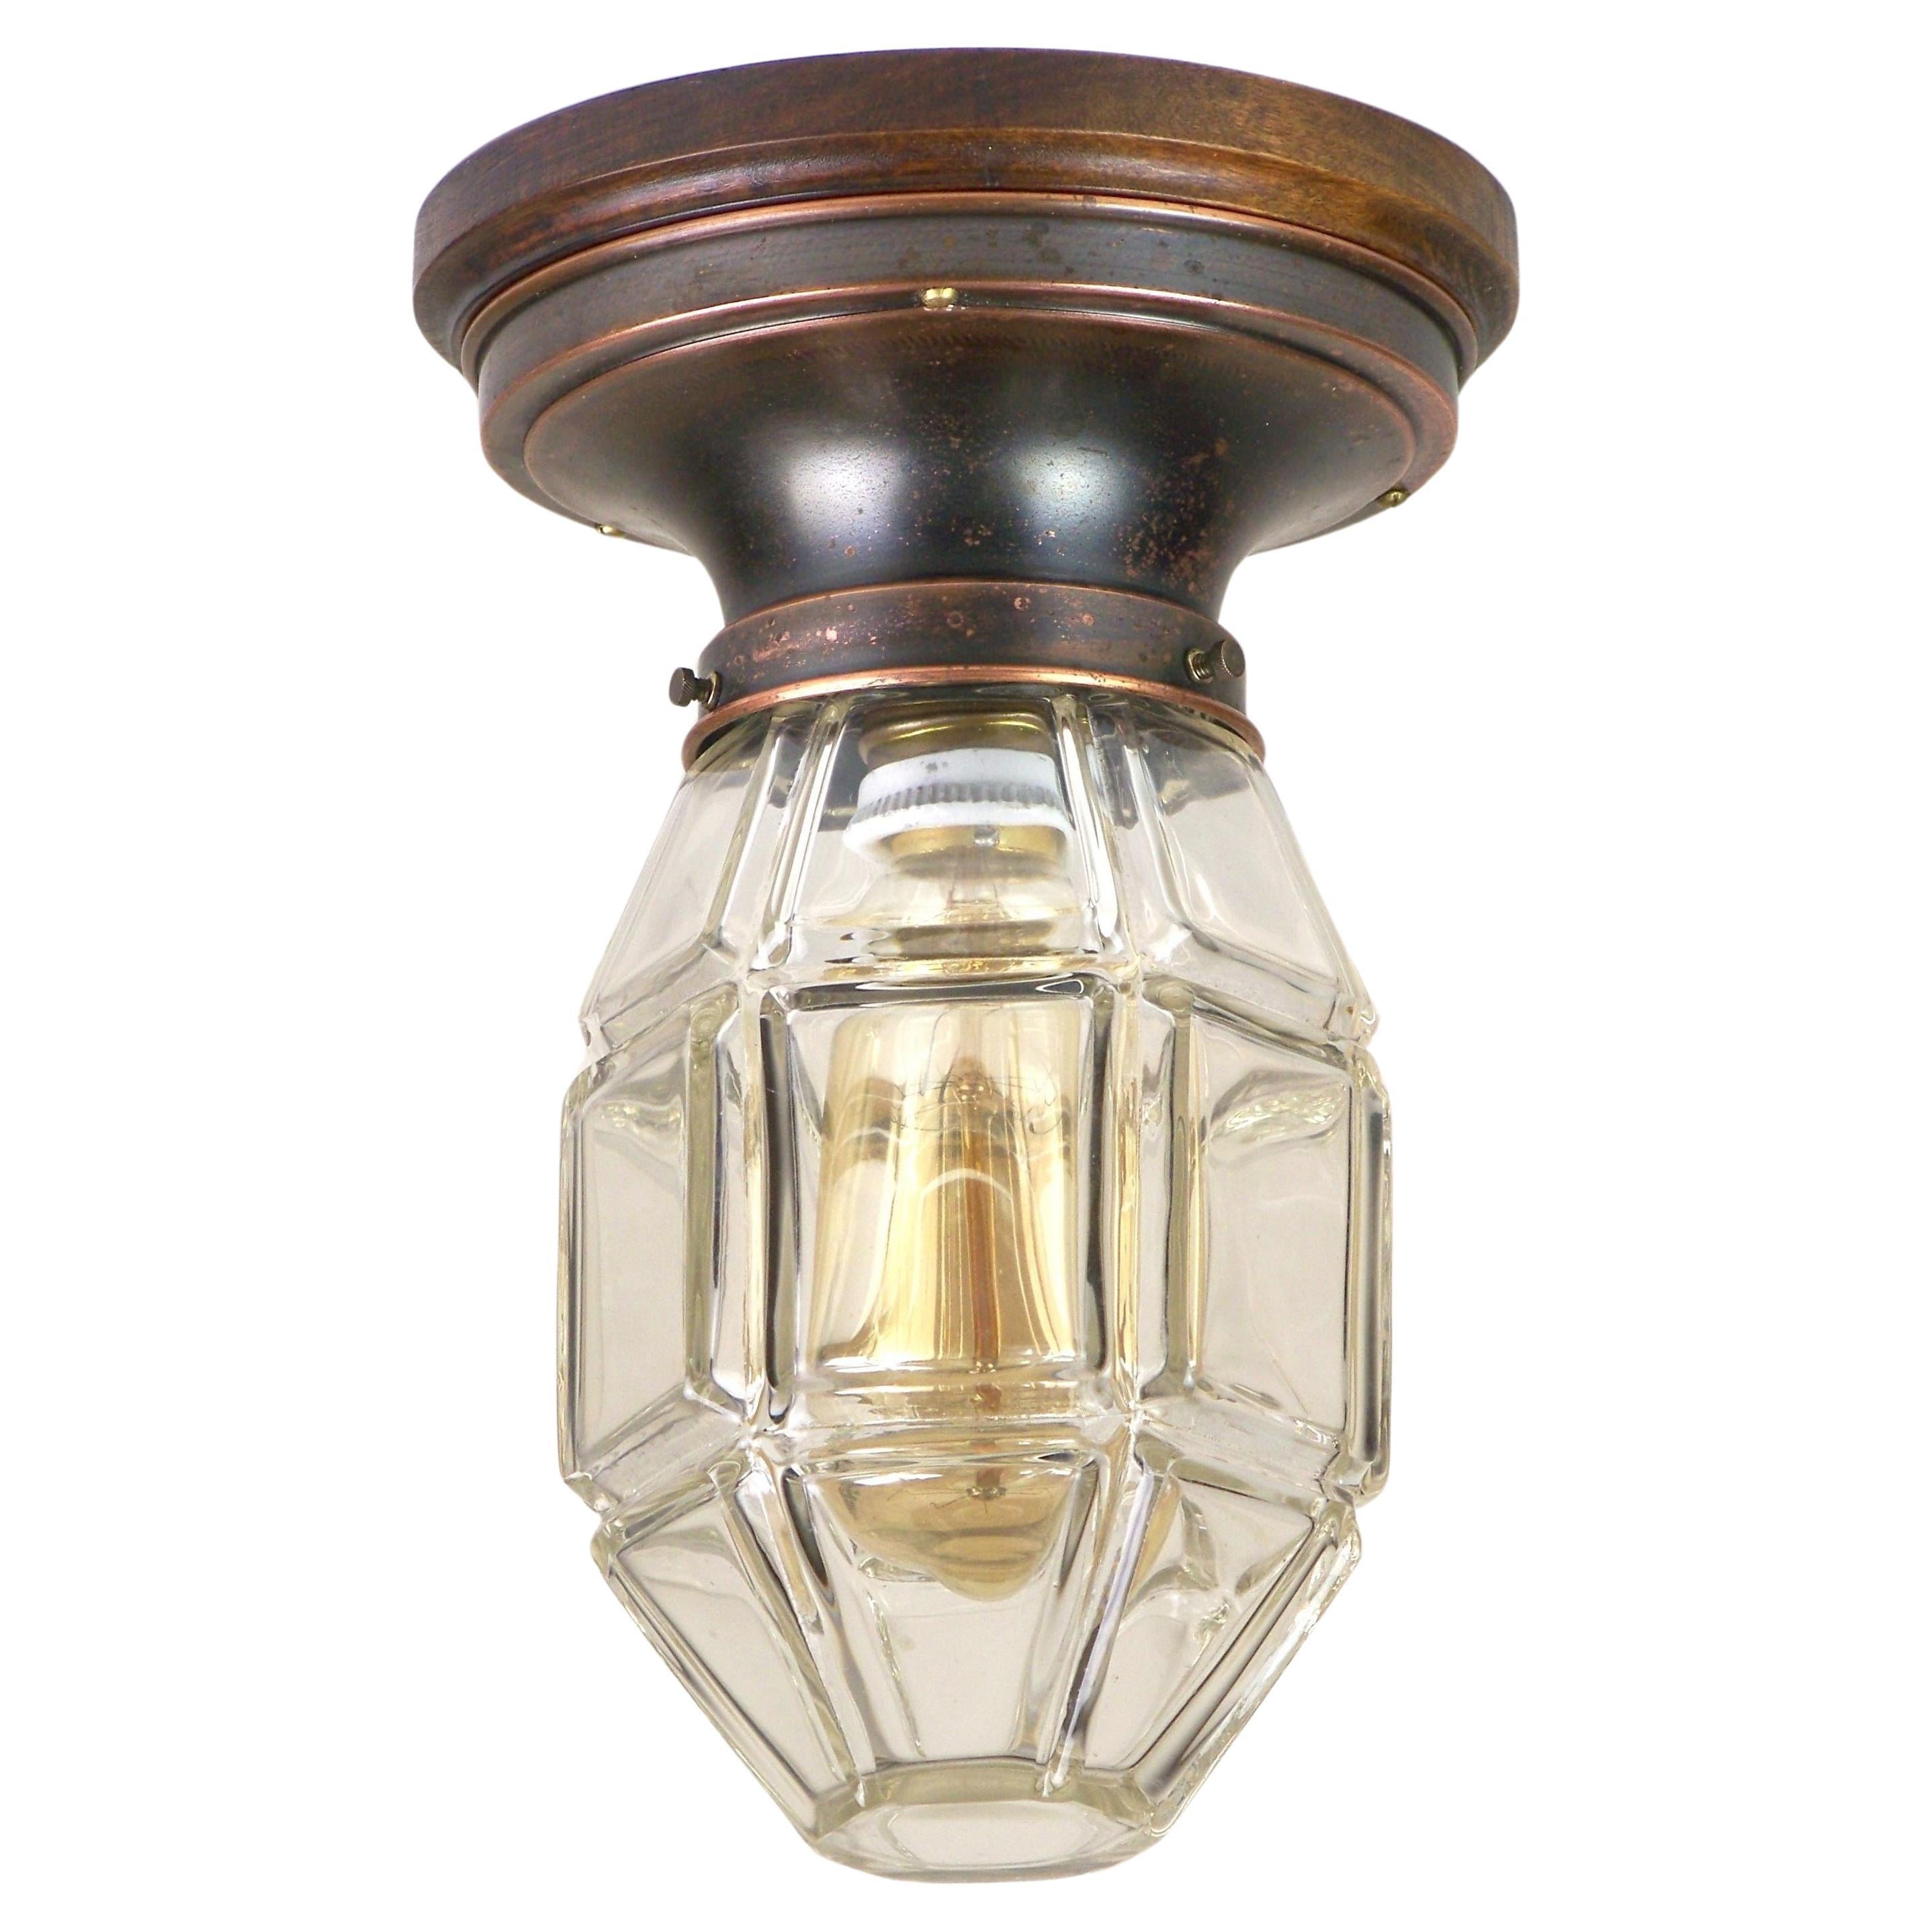 Copper ceiling lamp, chandelier